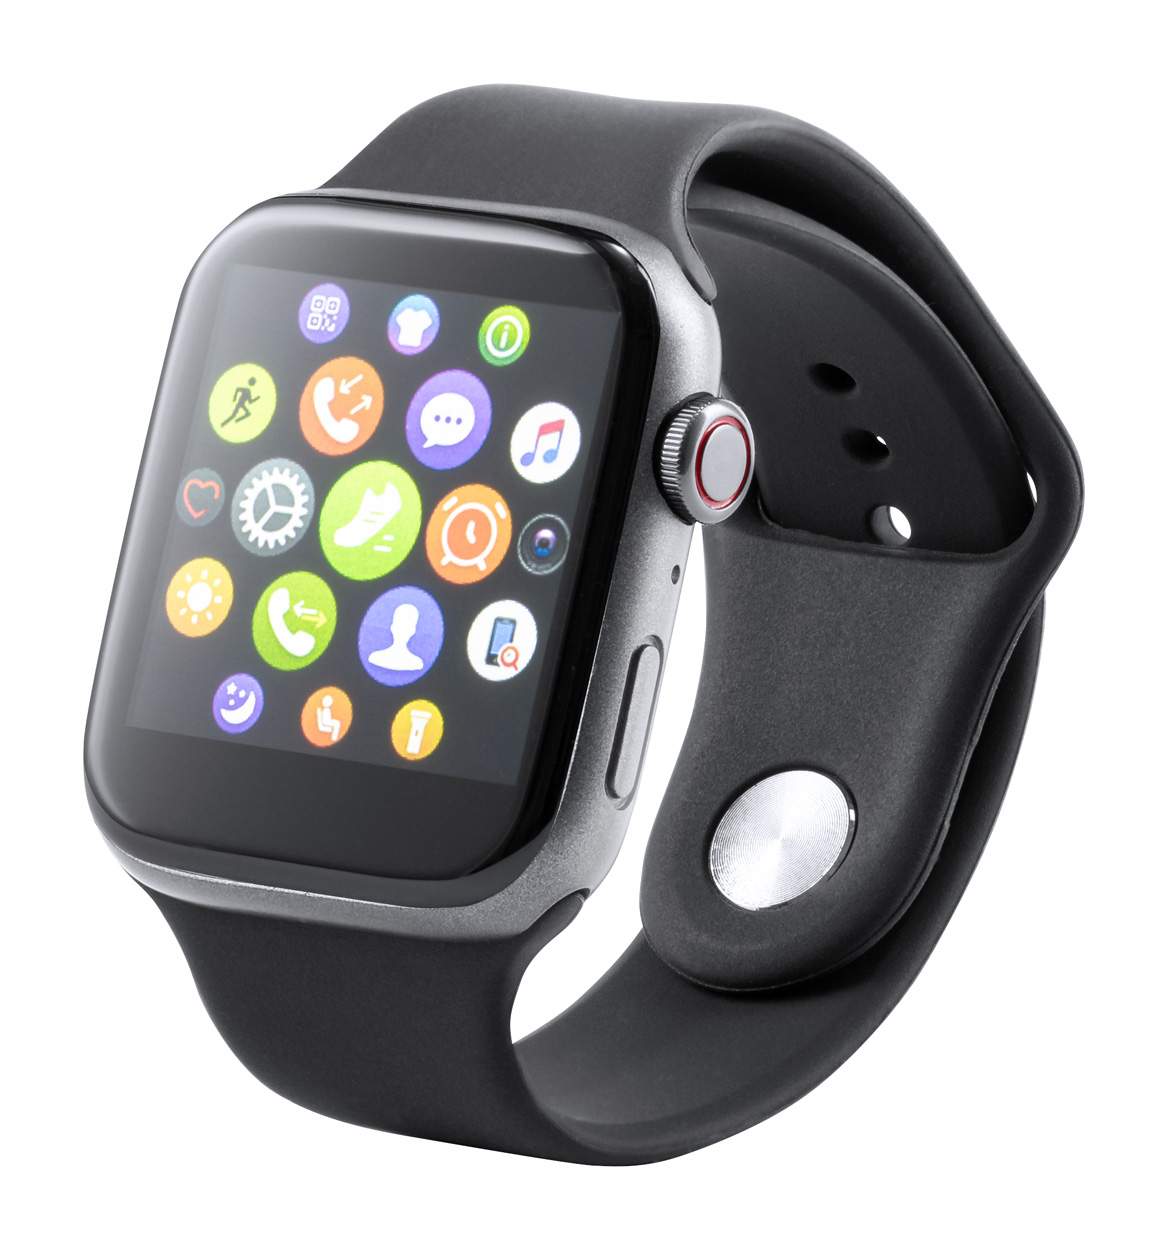 Proxor smart watch - black